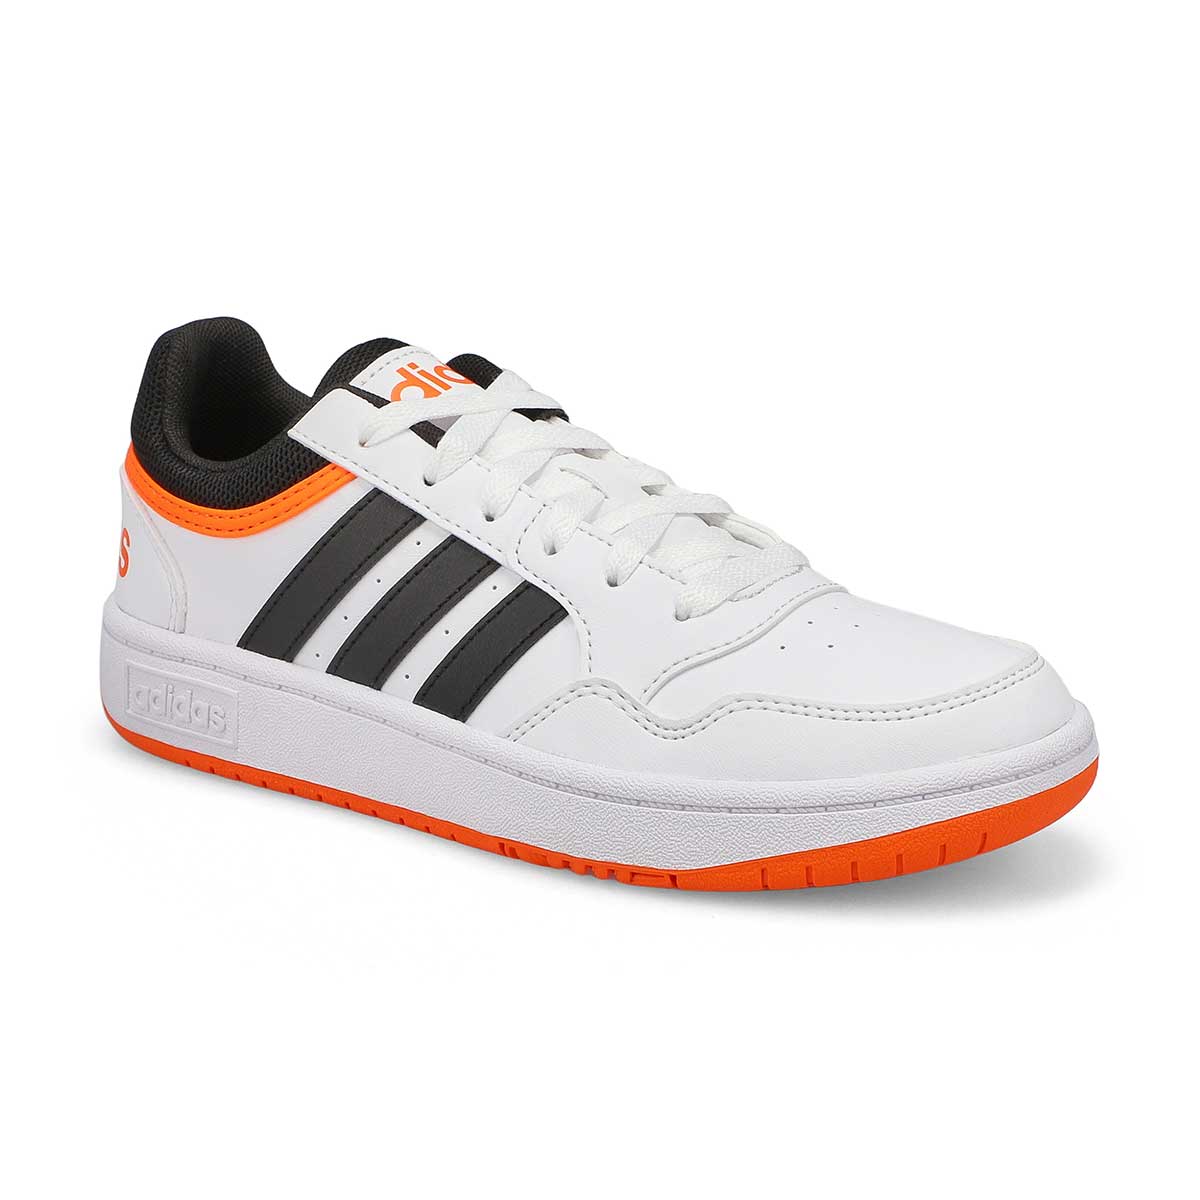 Kds Hoops 3.0 K Sneaker - White/Black/Orange